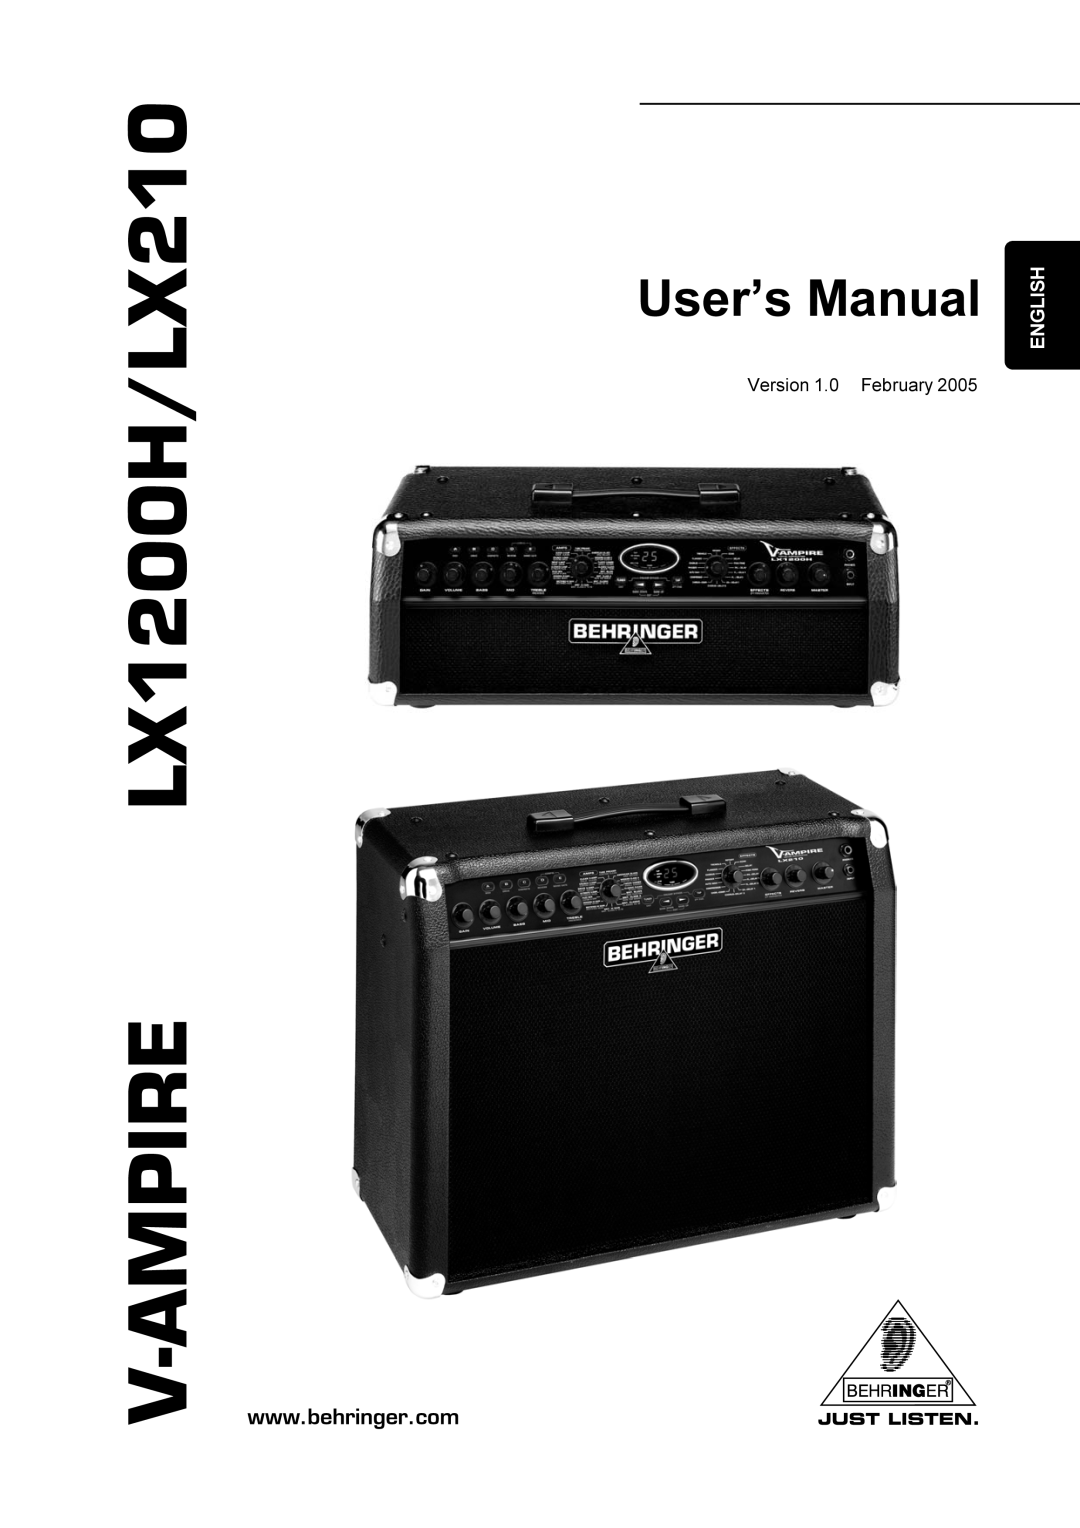 Behringer manual Version 1.0 February, LX1200H/LX210 V-AMPIRE, User’s Manual, English 